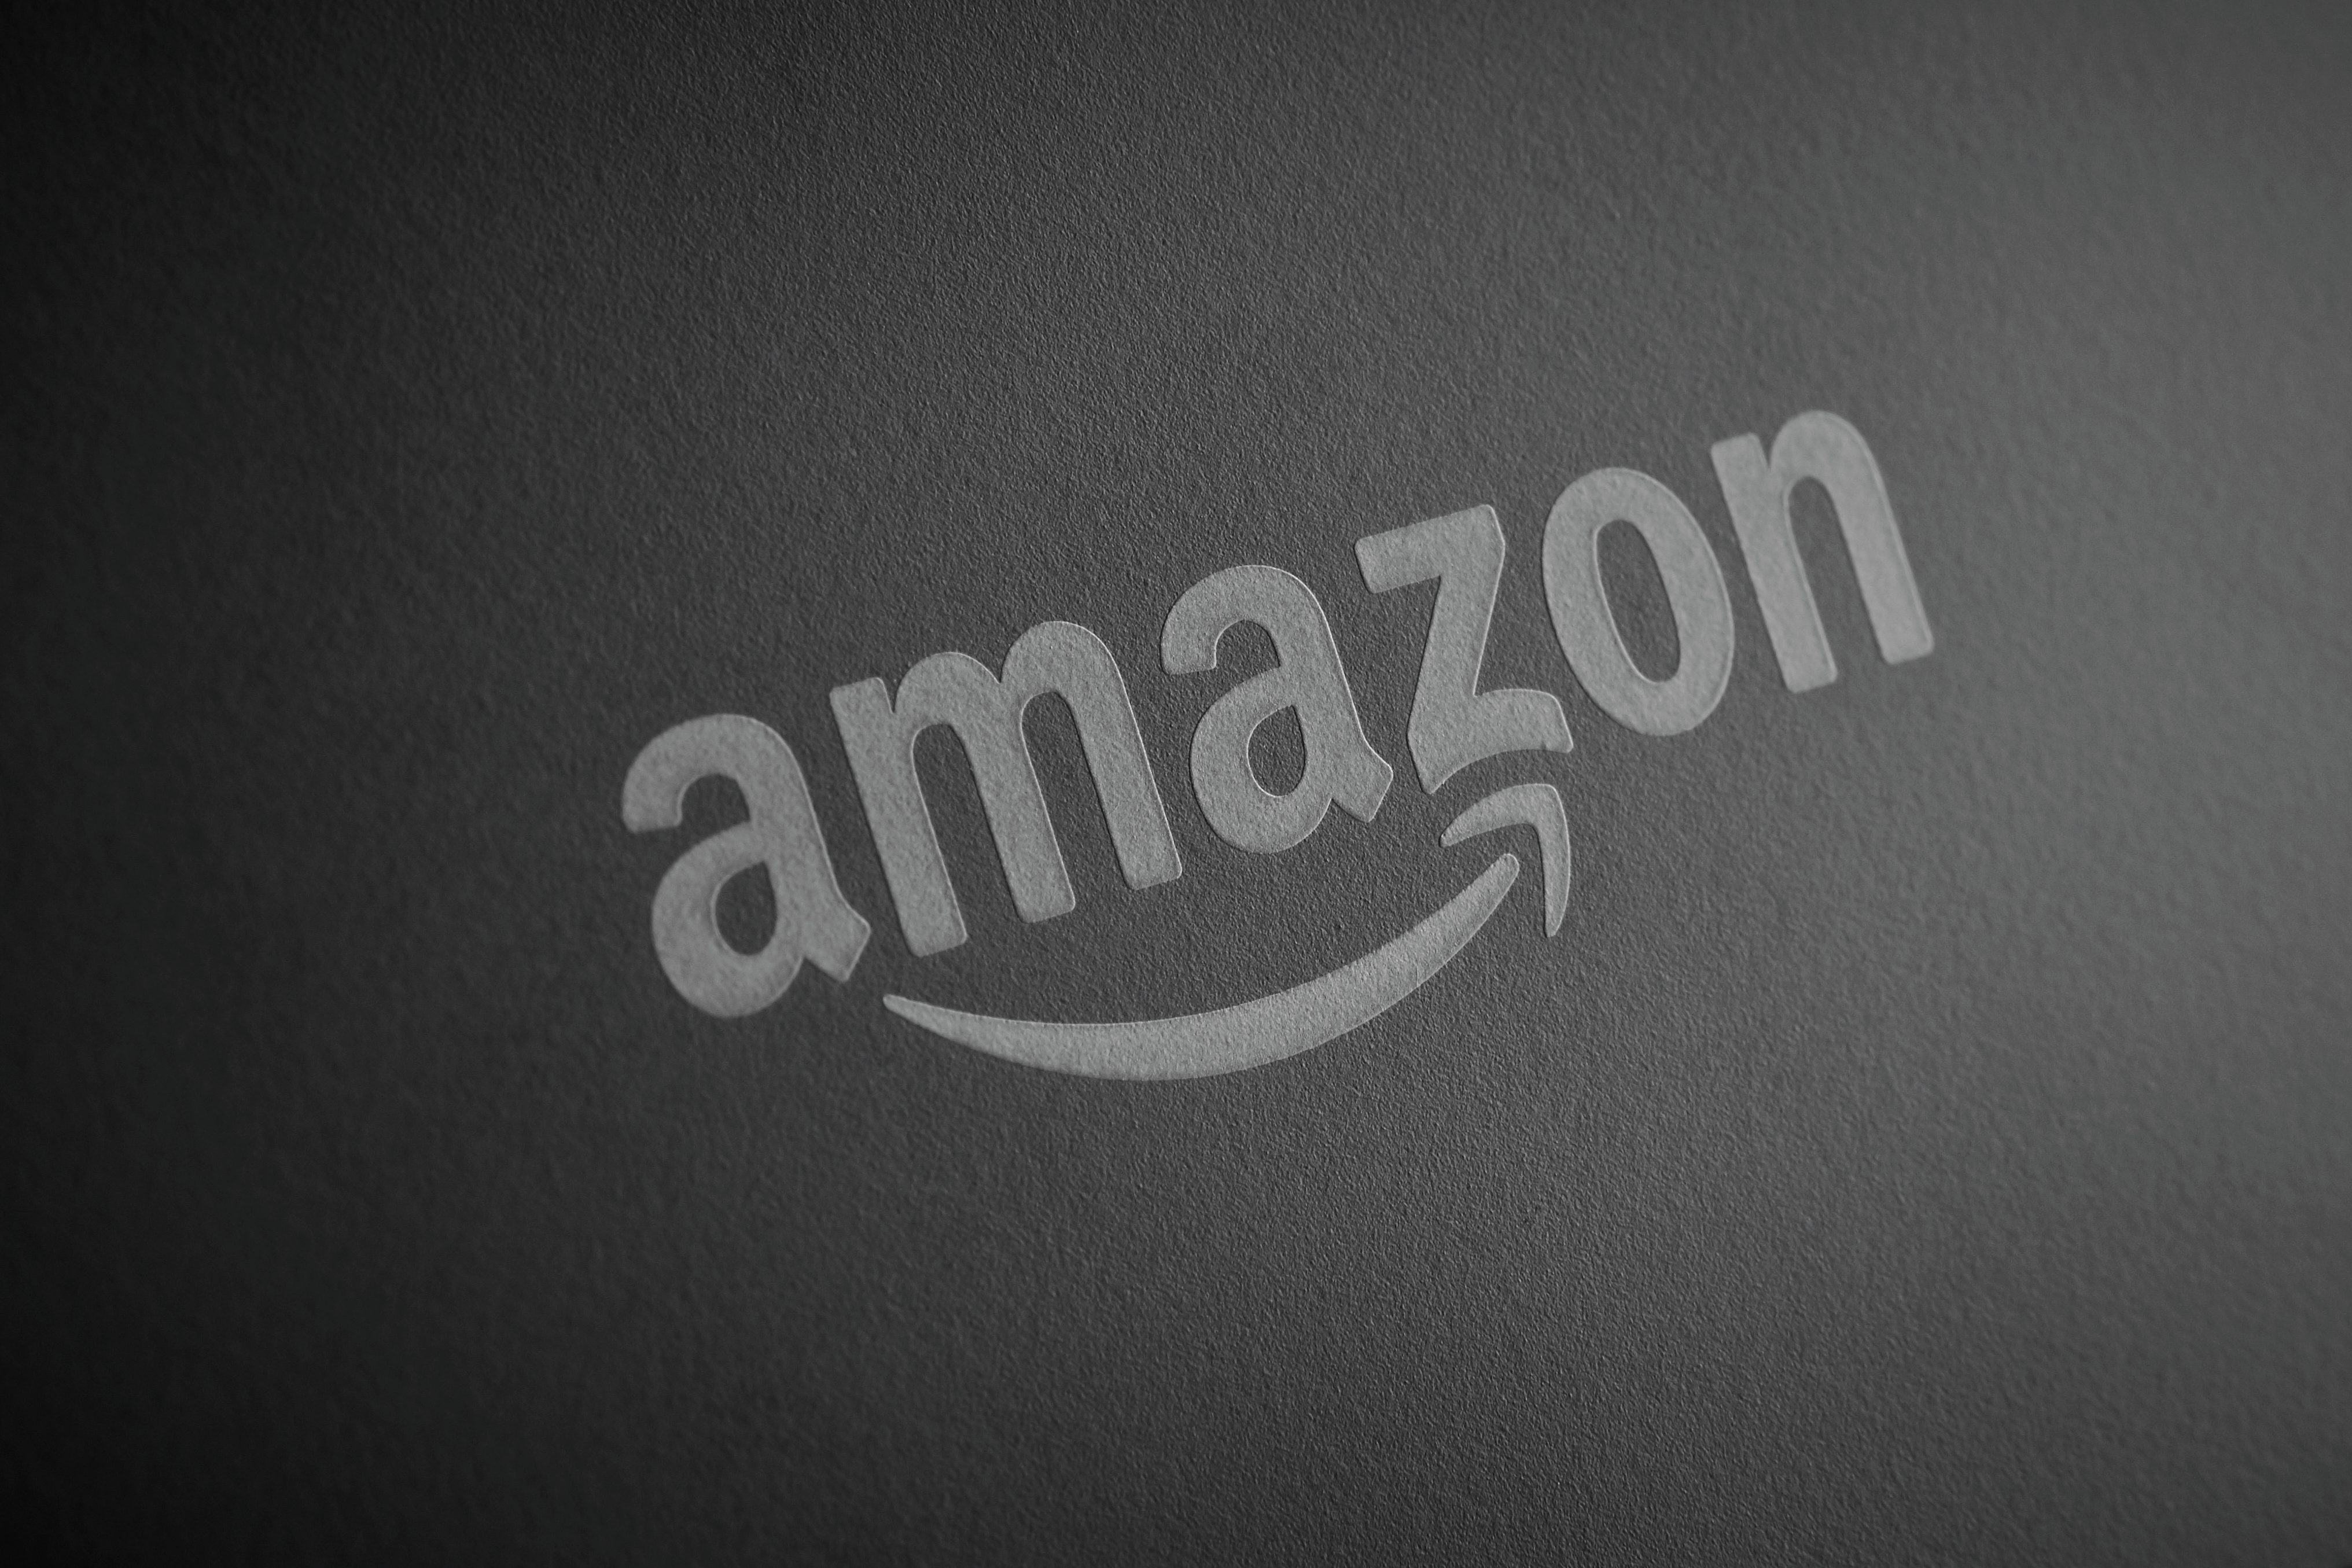 Amazon poised to give Alexa voice assistant major AI upgrade